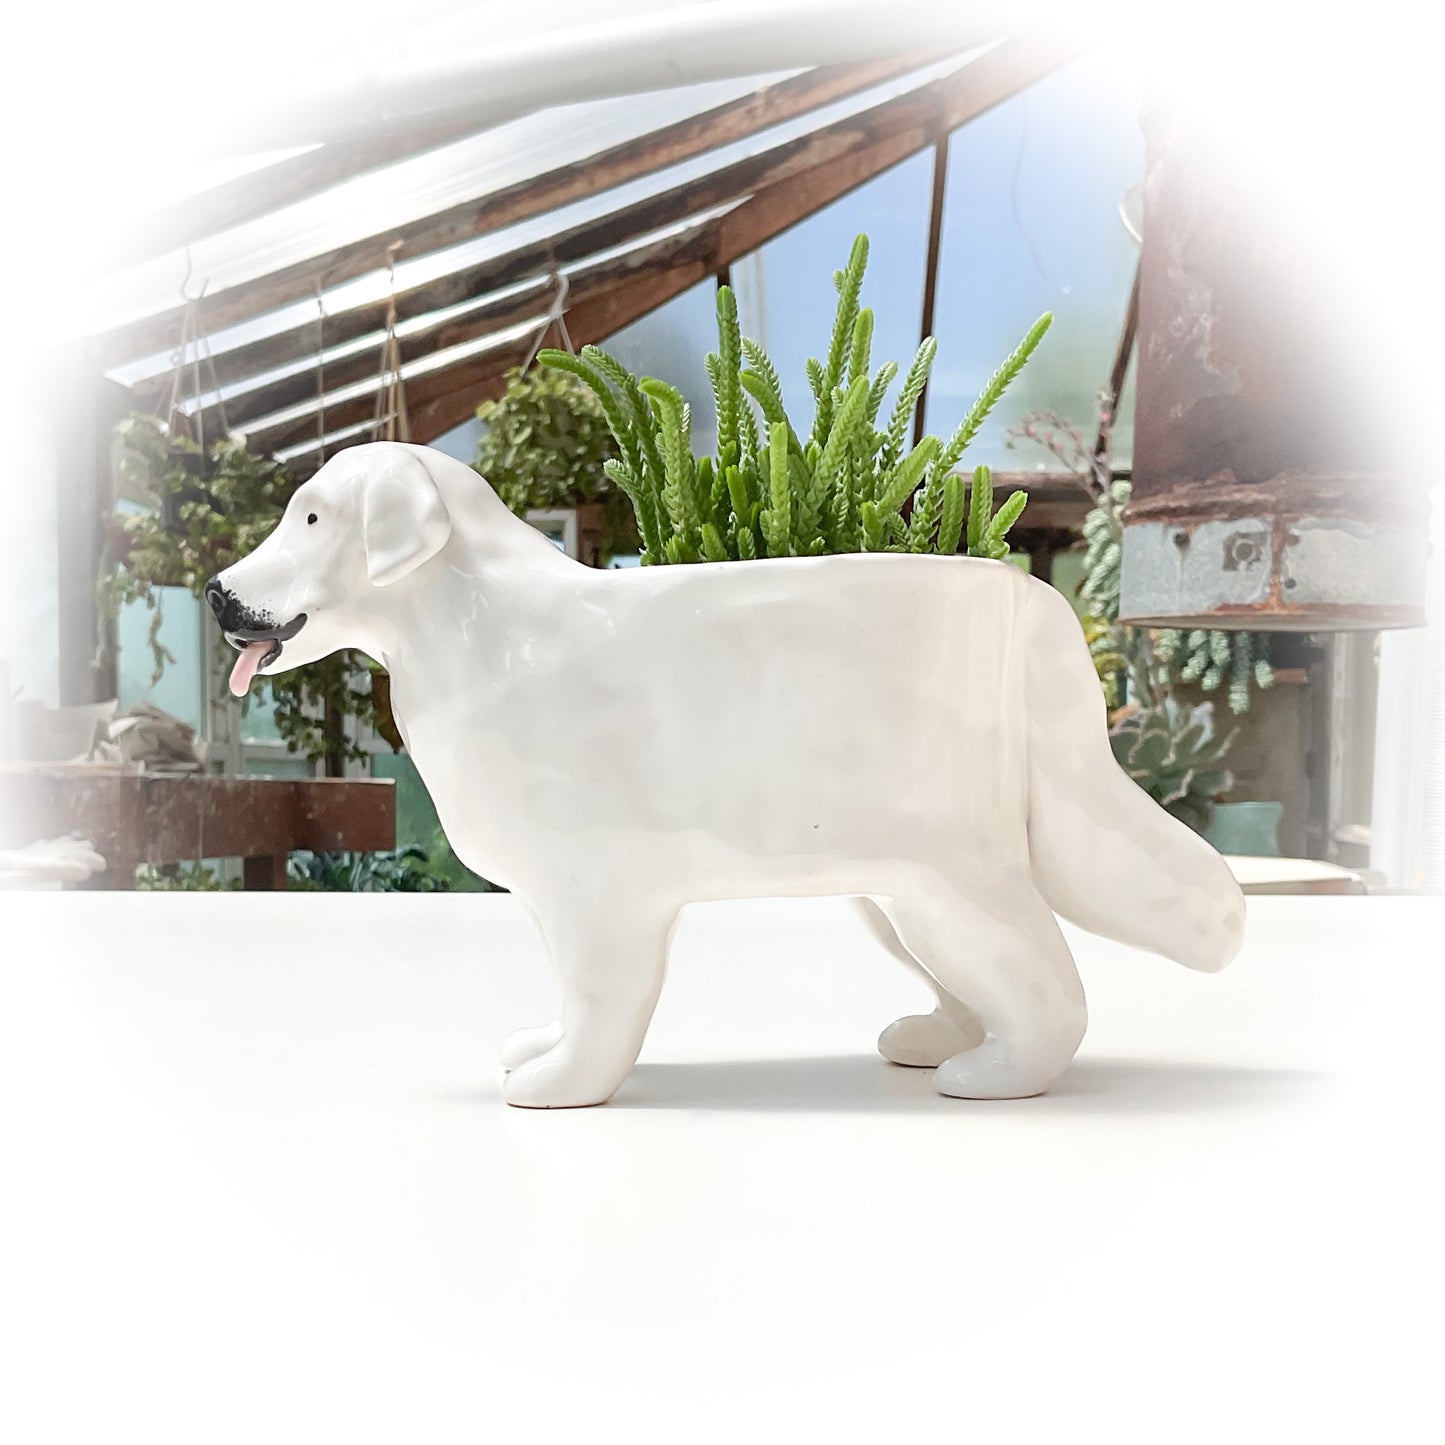 Great Pyrenees Dog Planter #2 - Ceramic Dog Plant Pot